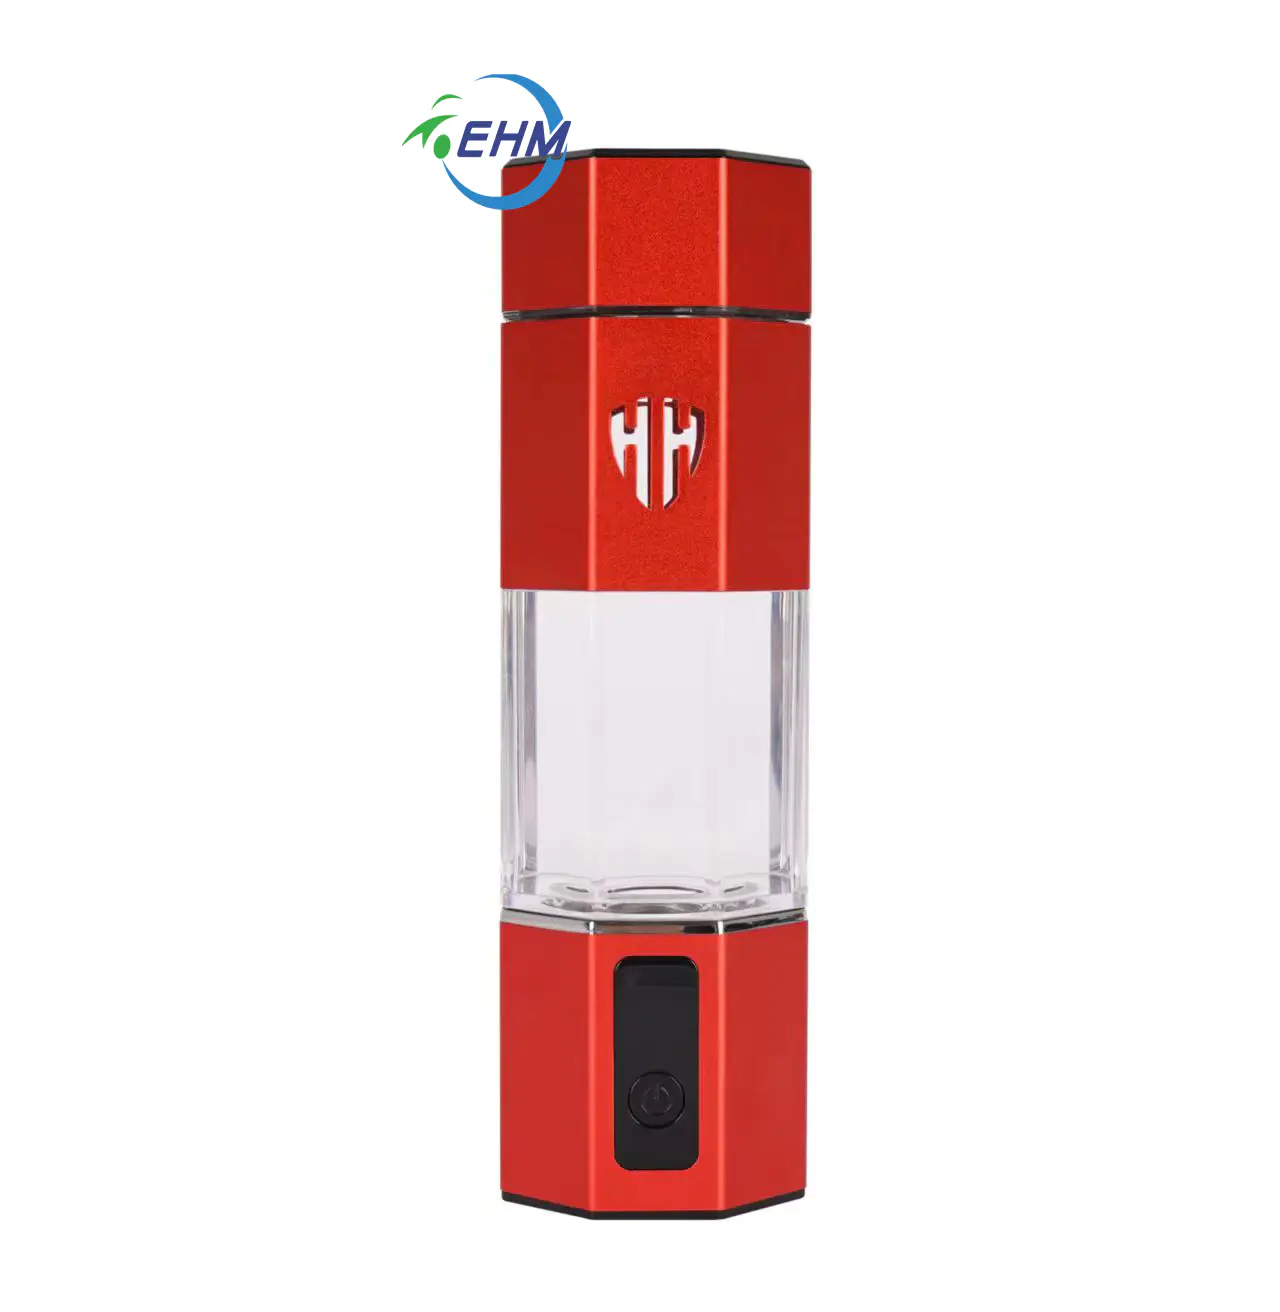 Amazon hot selling SPE PEM Portable Hydrogen Rich Water Bottle Generator Molecular H2 Water Maker Cup 5000+ppb USB Type C recharging